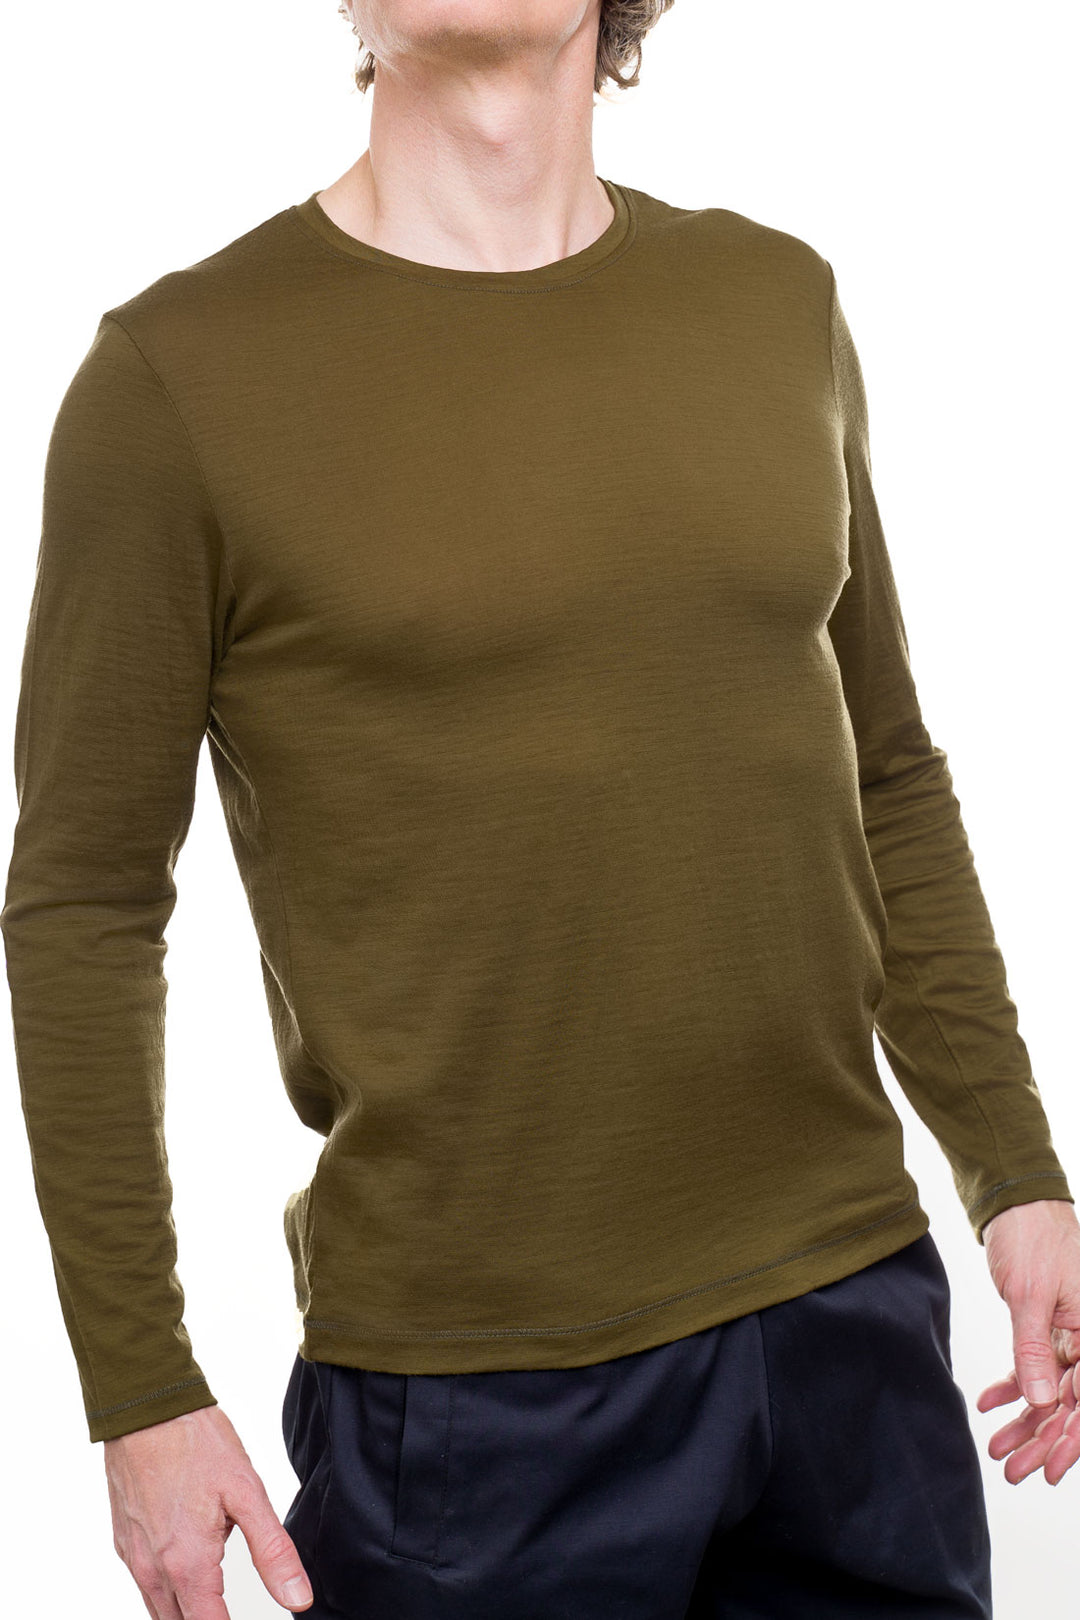 Long Sleeve Superfine 100% Merino Wool Shirt in olive green